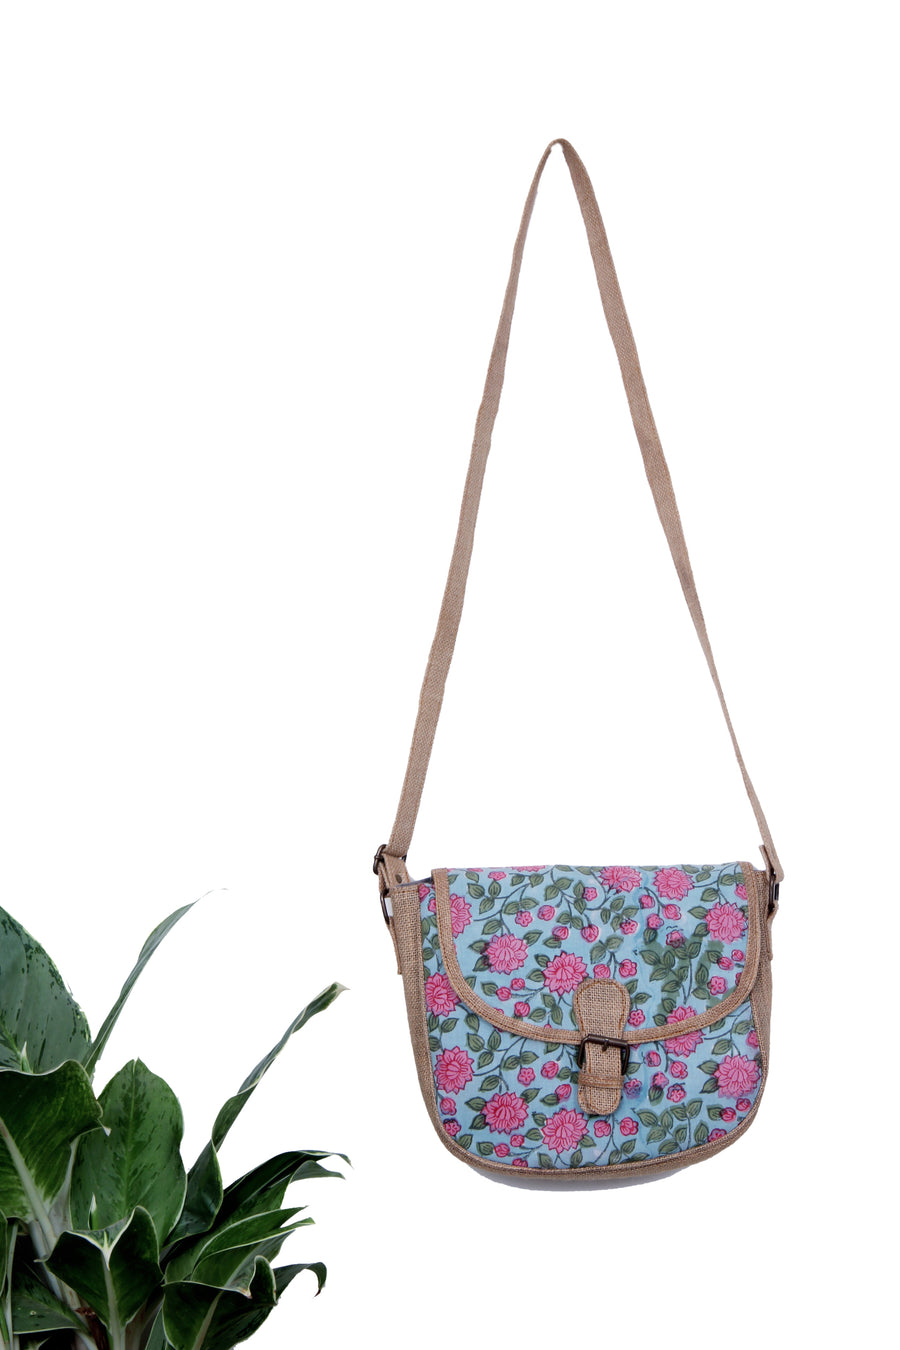 Sling Bags In Handbock Printed Cotton And Jute - Tina Eapen Design Studio